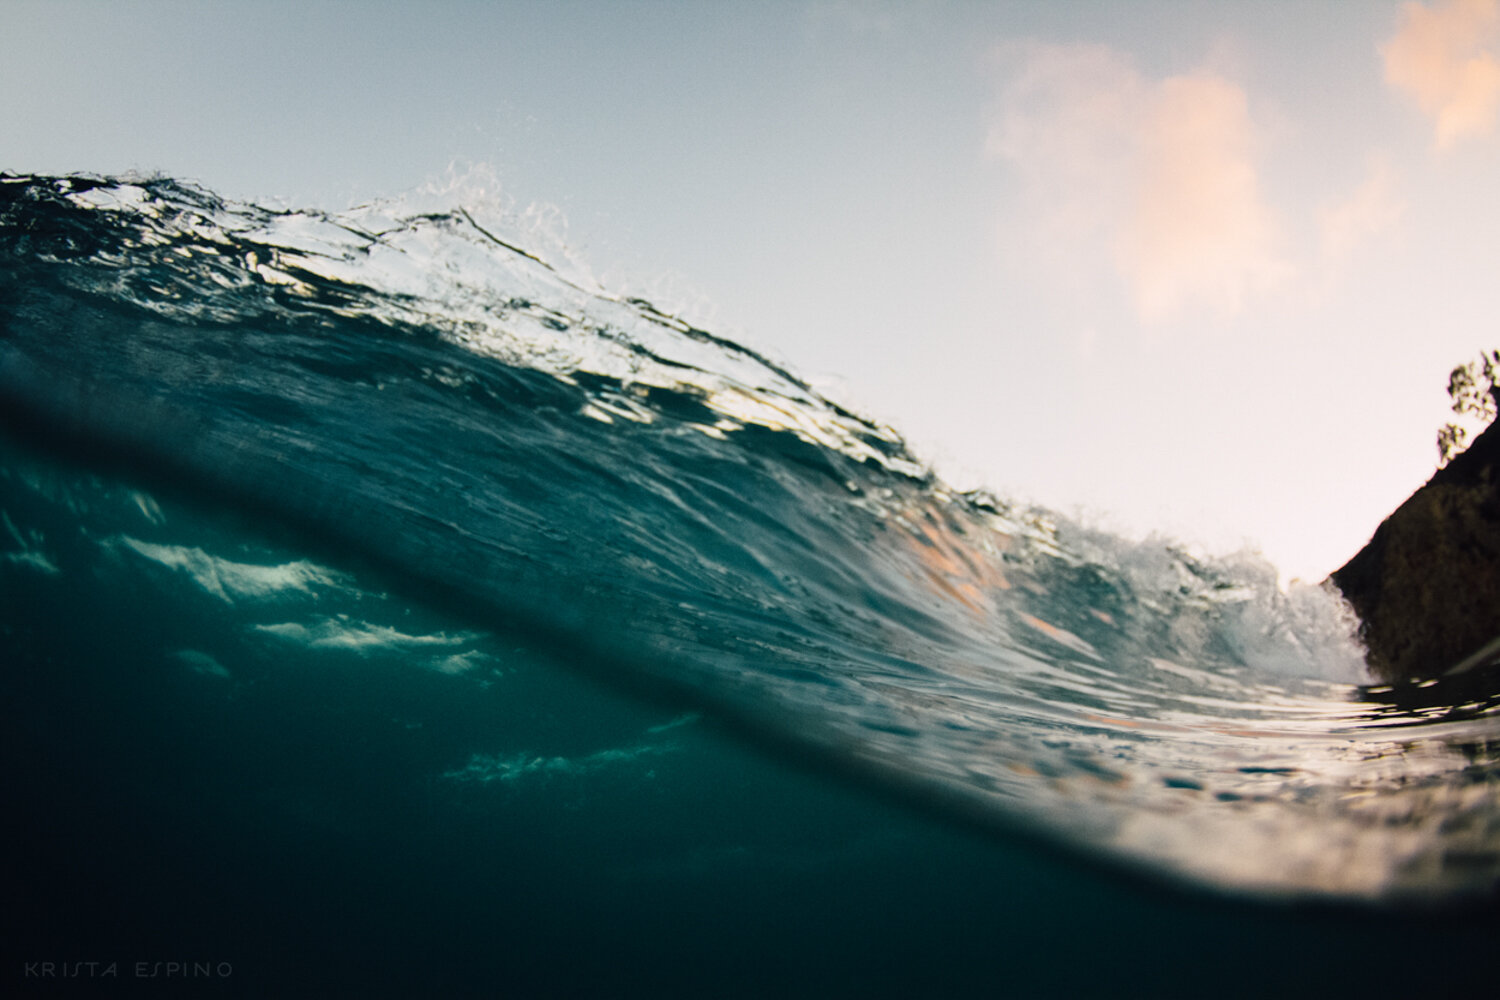 bodysurf waves lifestyle nature photography photographer krista espino travel underwater swim ocean laguna beach_-10.jpg